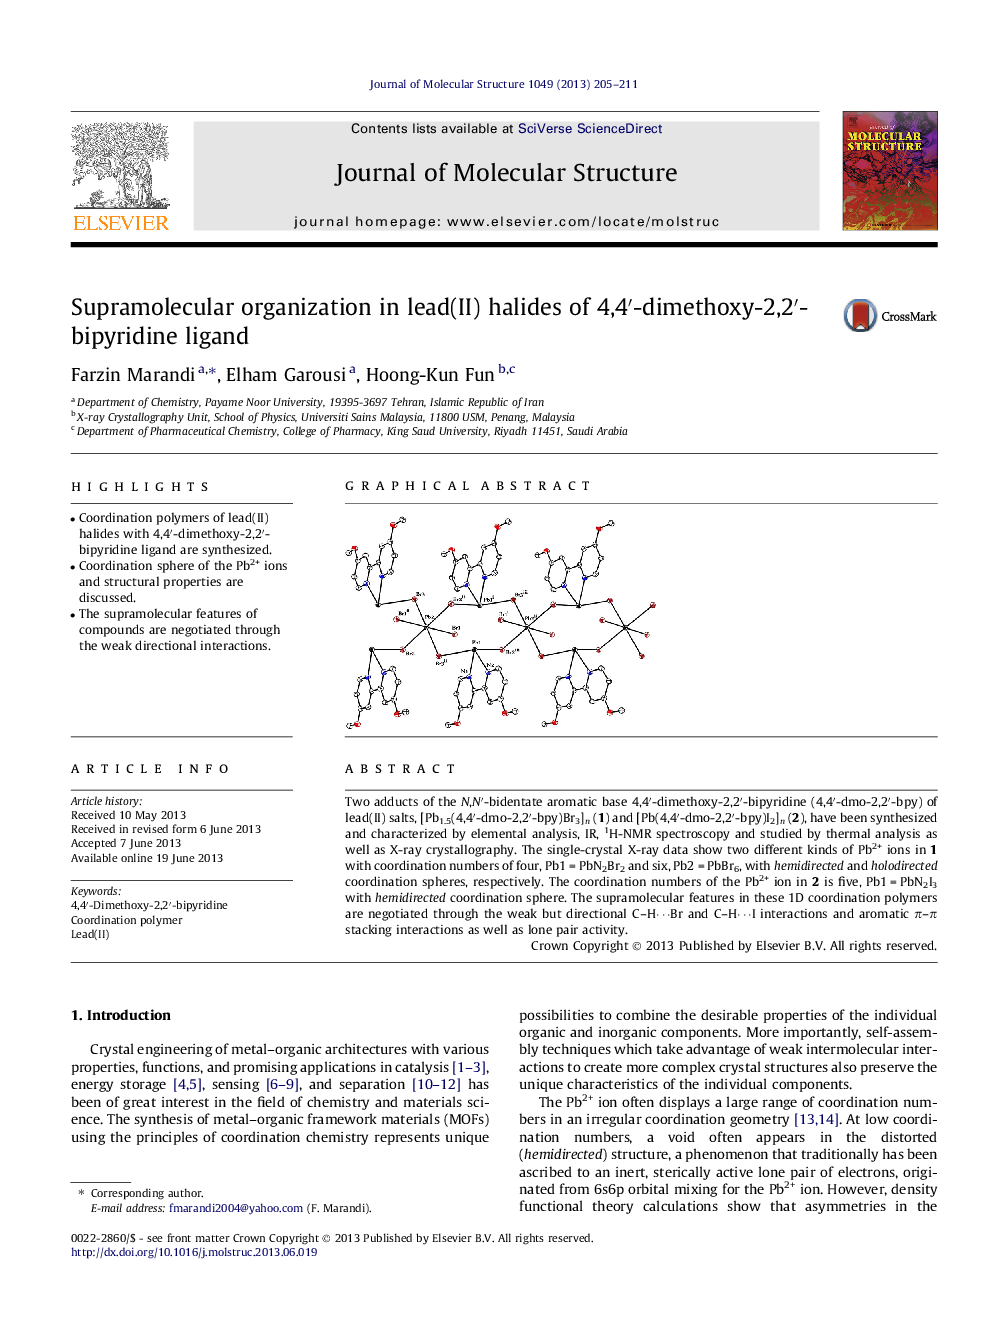 Supramolecular organization in lead(II) halides of 4,4â²-dimethoxy-2,2â²-bipyridine ligand